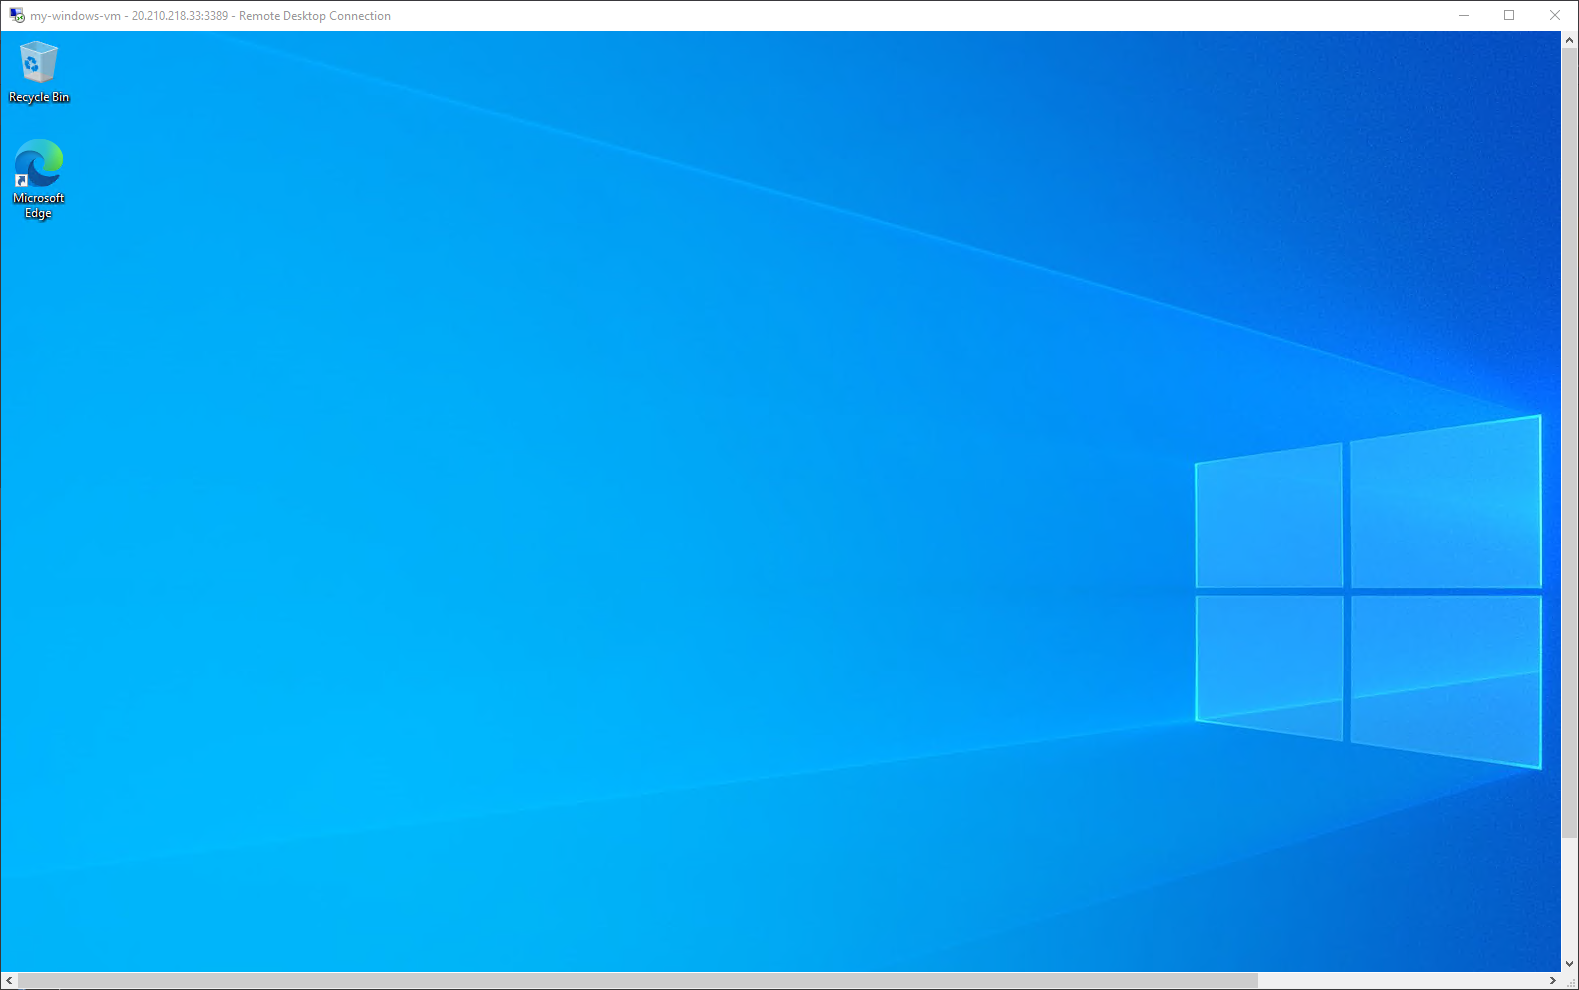 Viewing VM’s Windows 10 Desktop